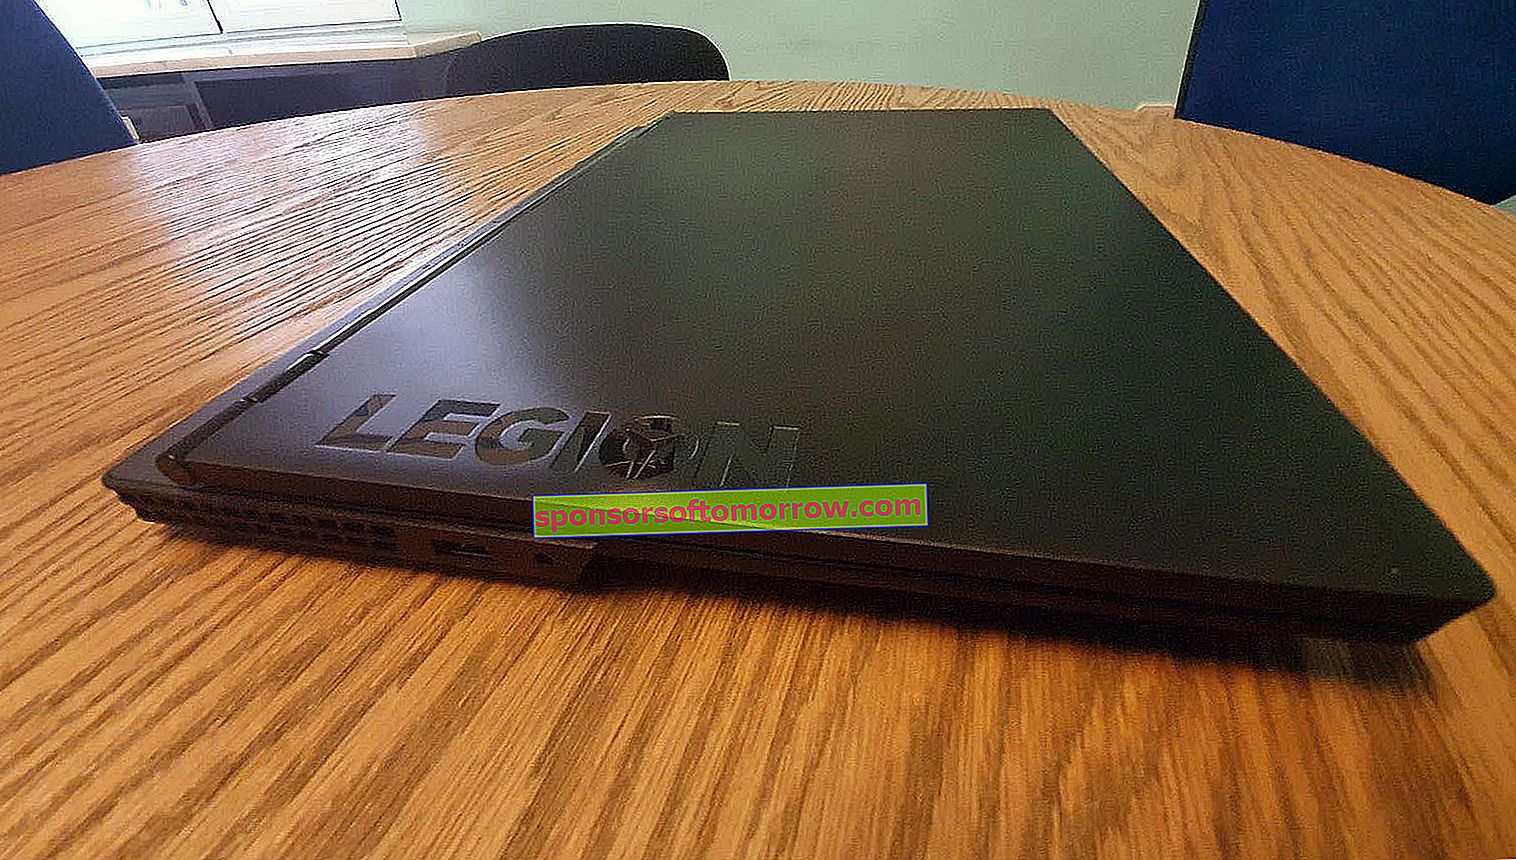 Lenovo-Legion-Y530 vue du profil